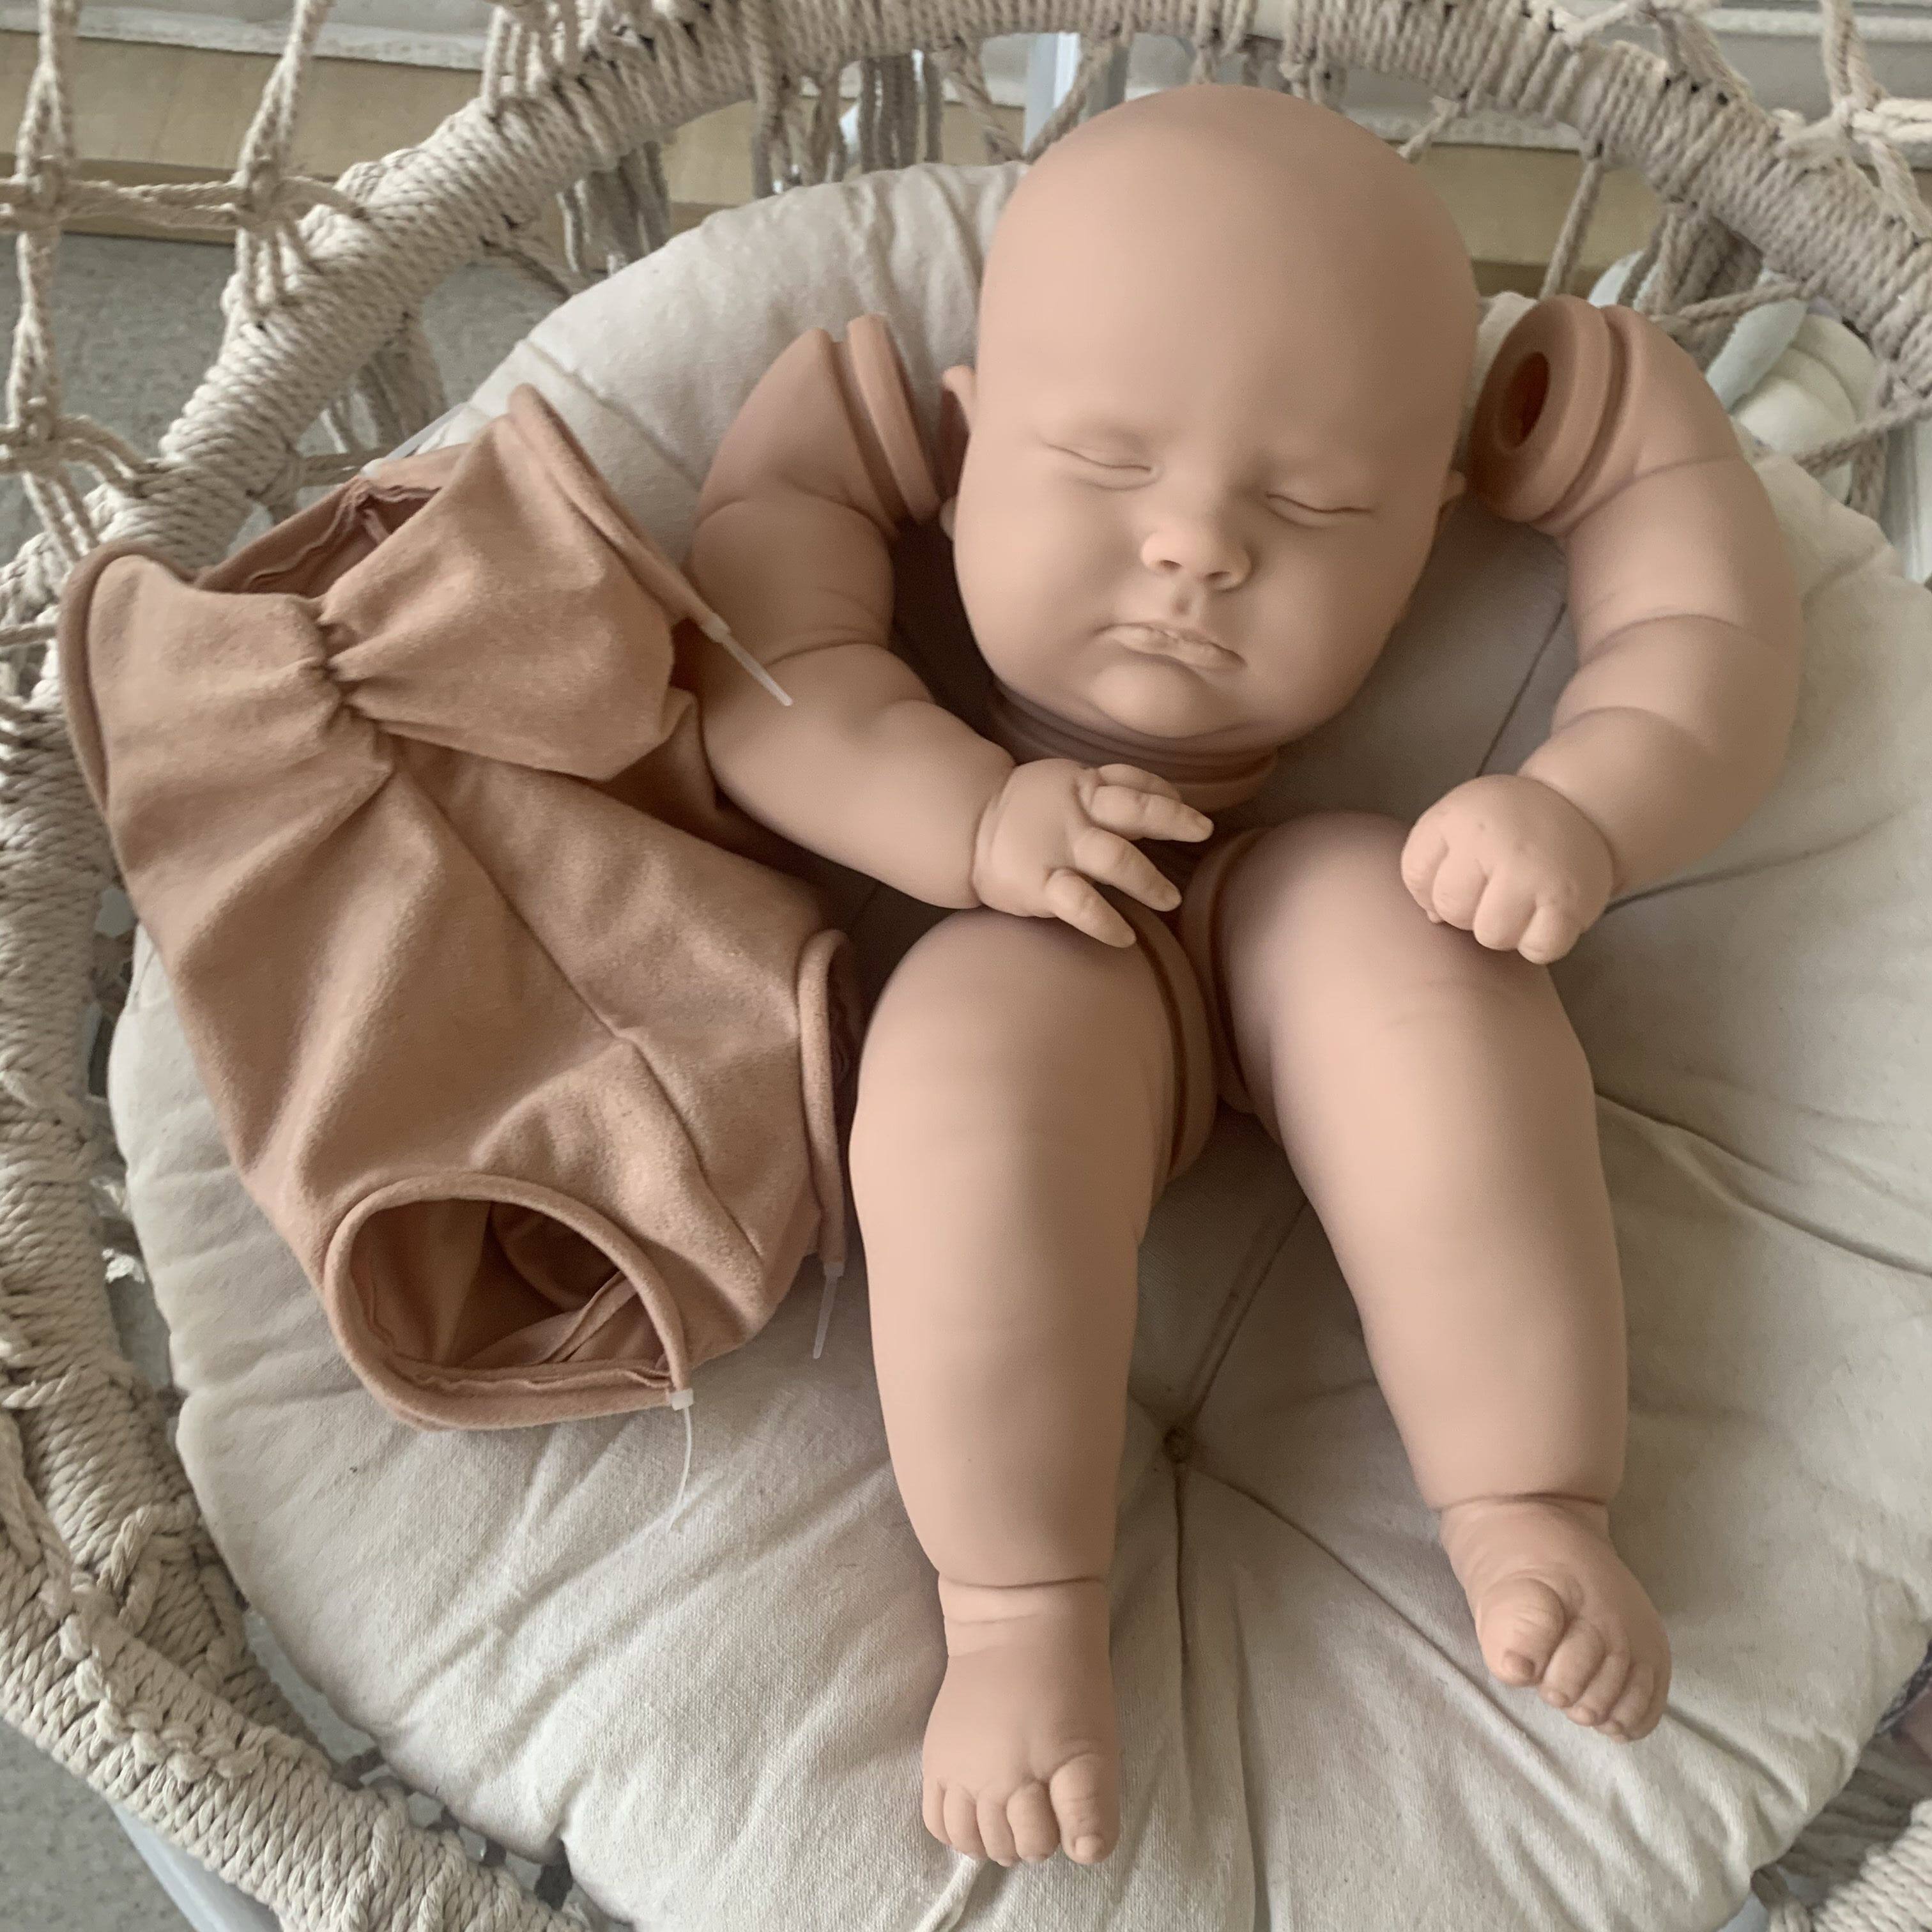 Reborn Baby Joseph ราคาถูก ซื้อออนไลน์ที่ - เม.ย. 2022 | Lazada.co.th